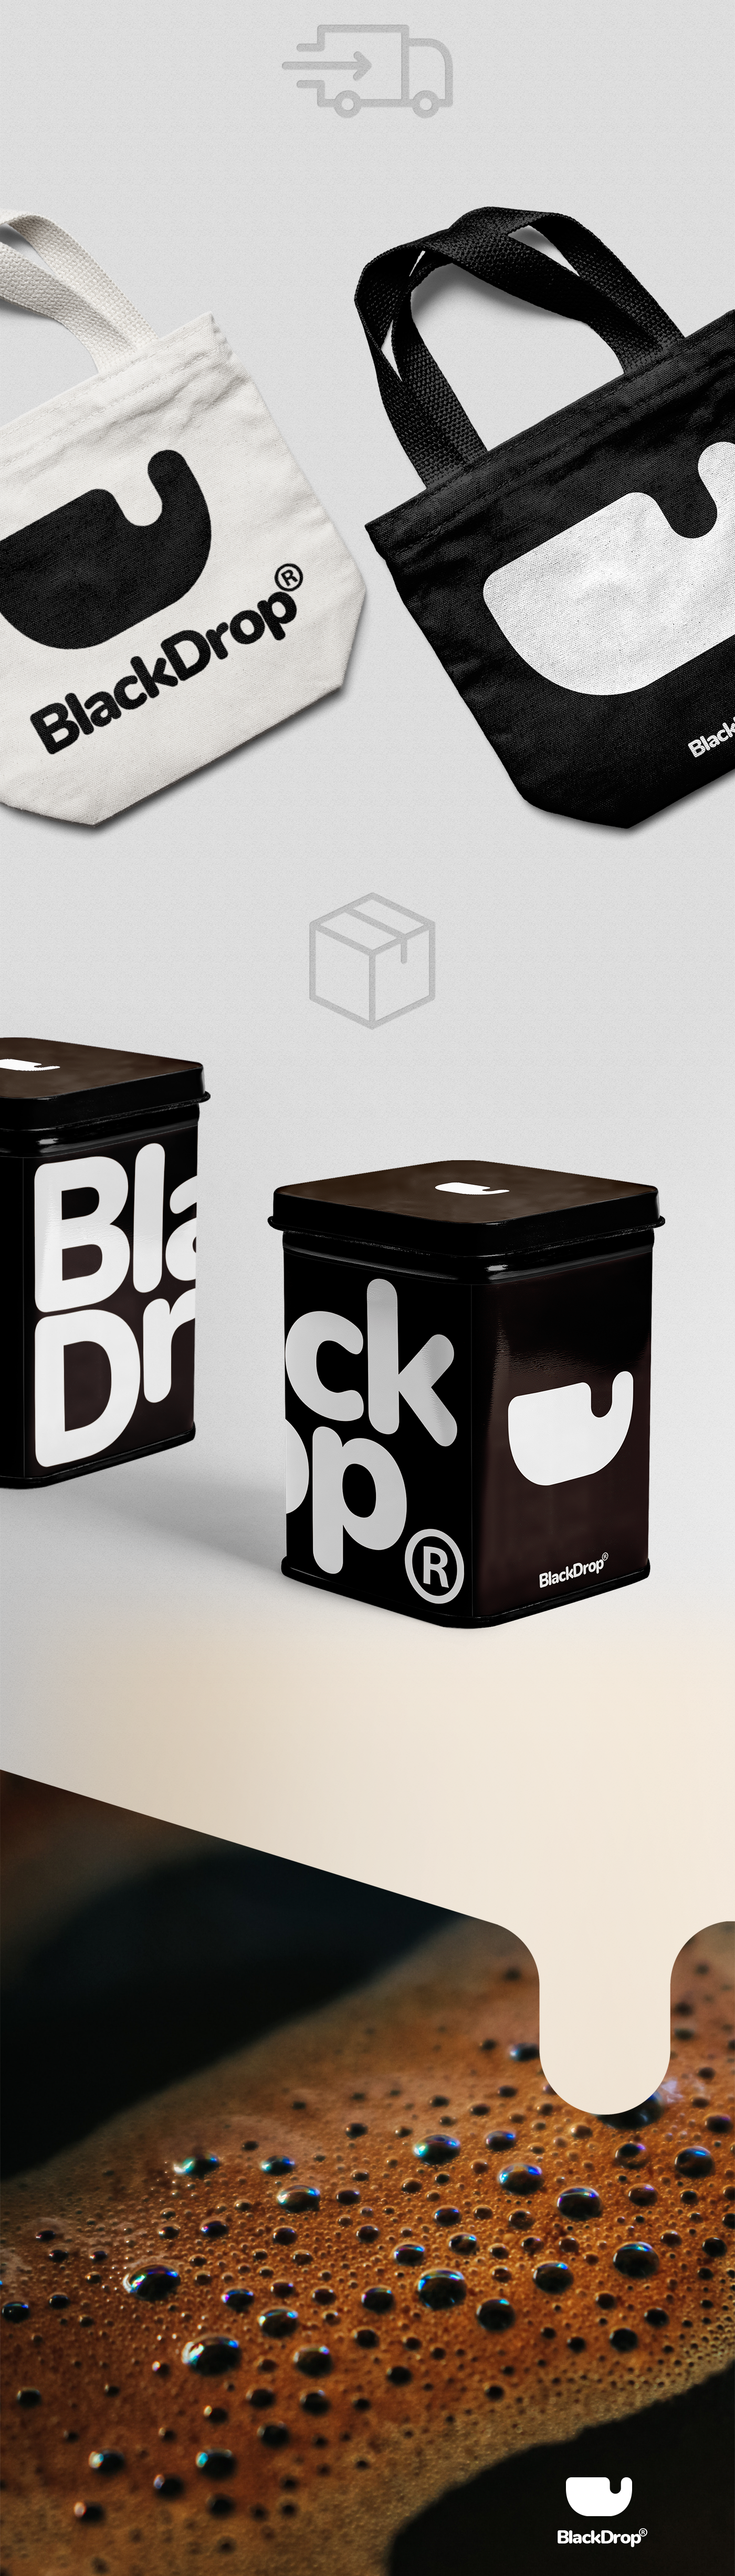 tendencias-diseno-logos-2021-negative-space-blanck-blackdrop-02